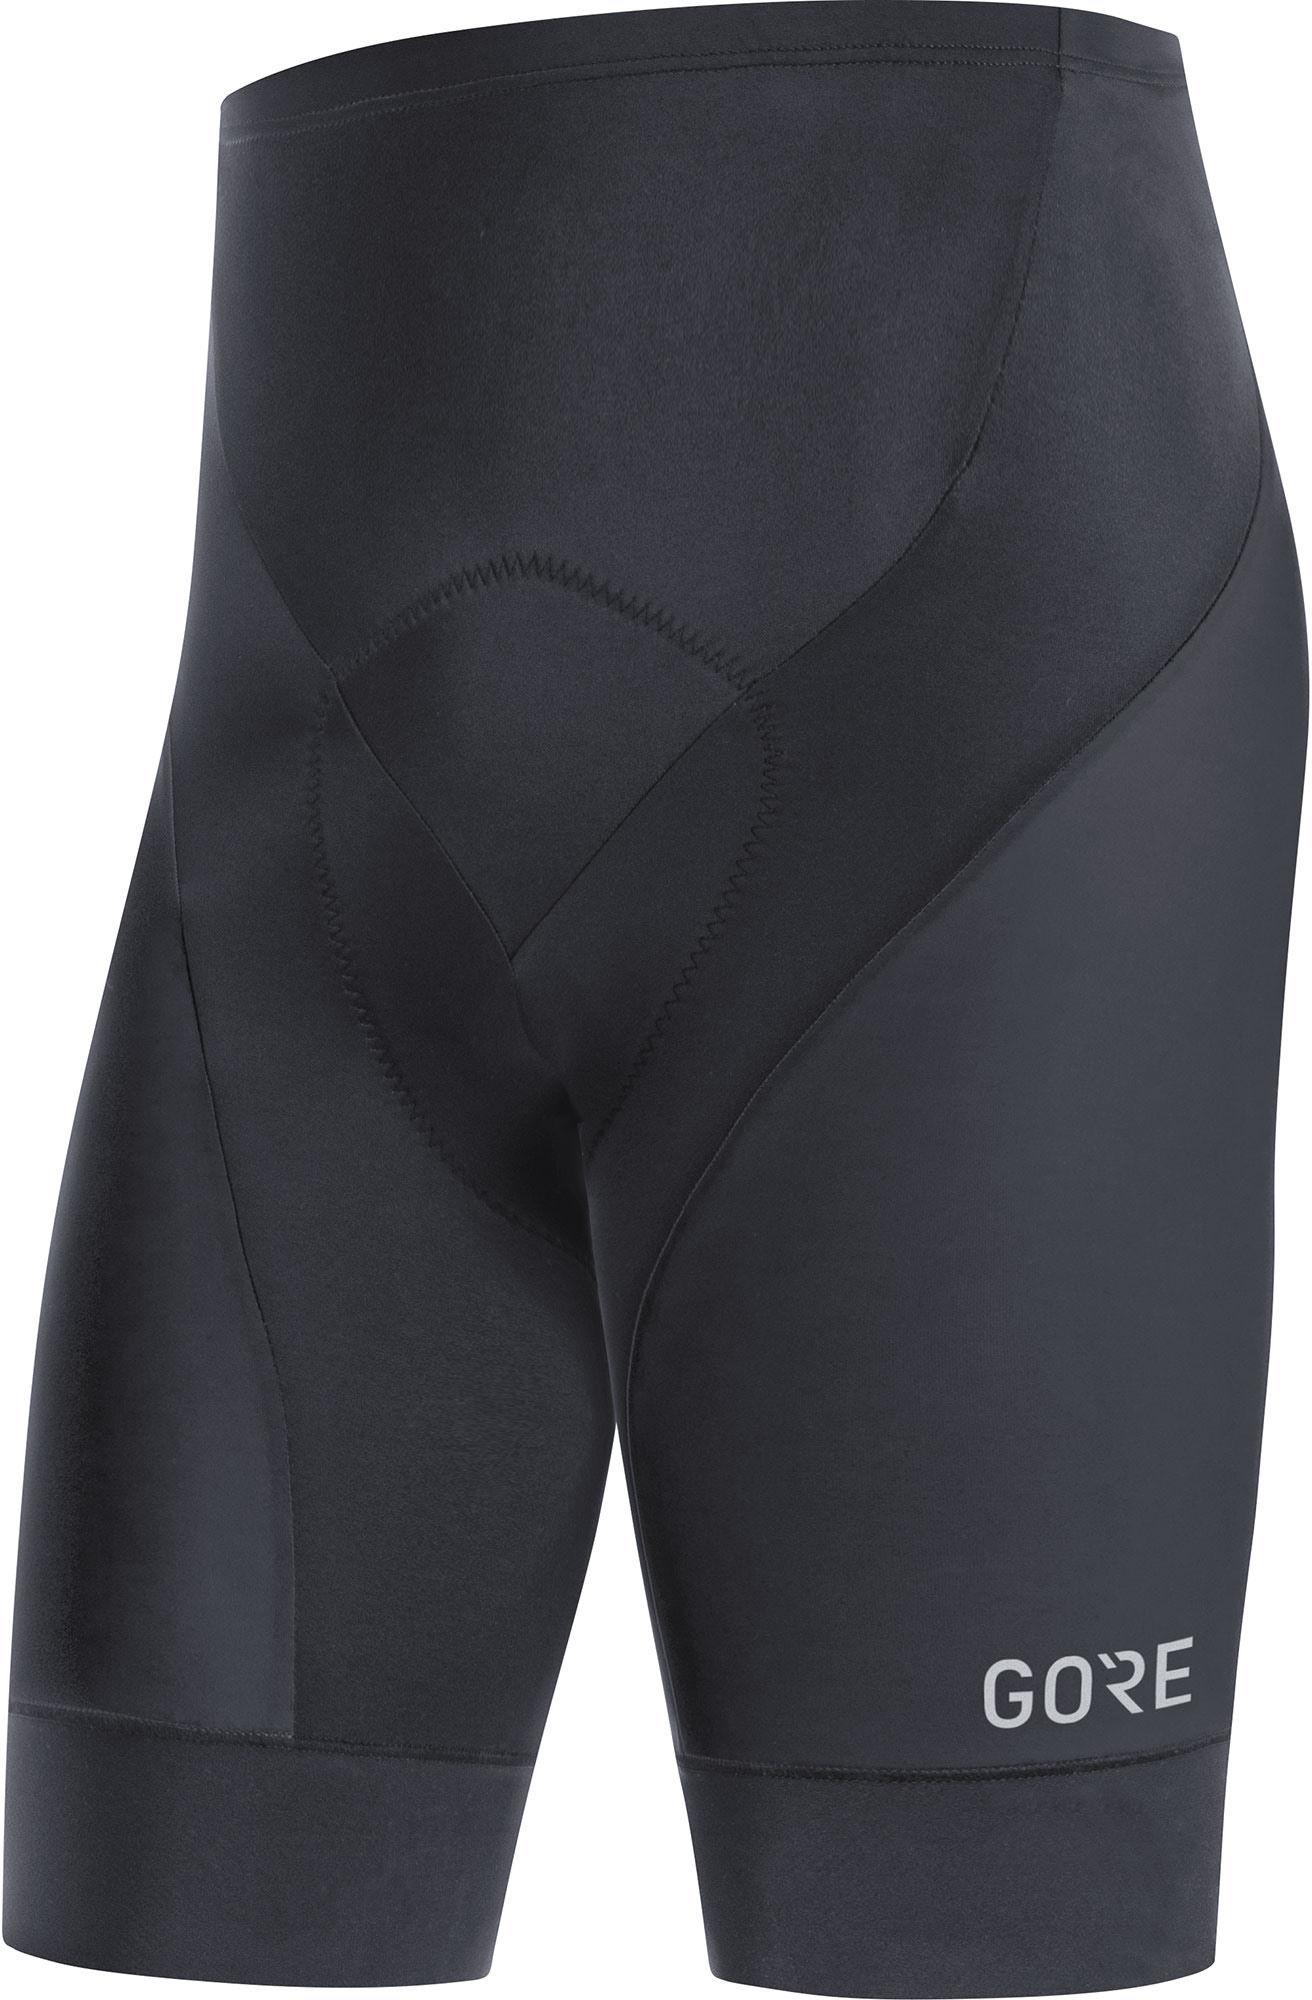 Gorewear C3 Cycle Short Tights Plus  Black